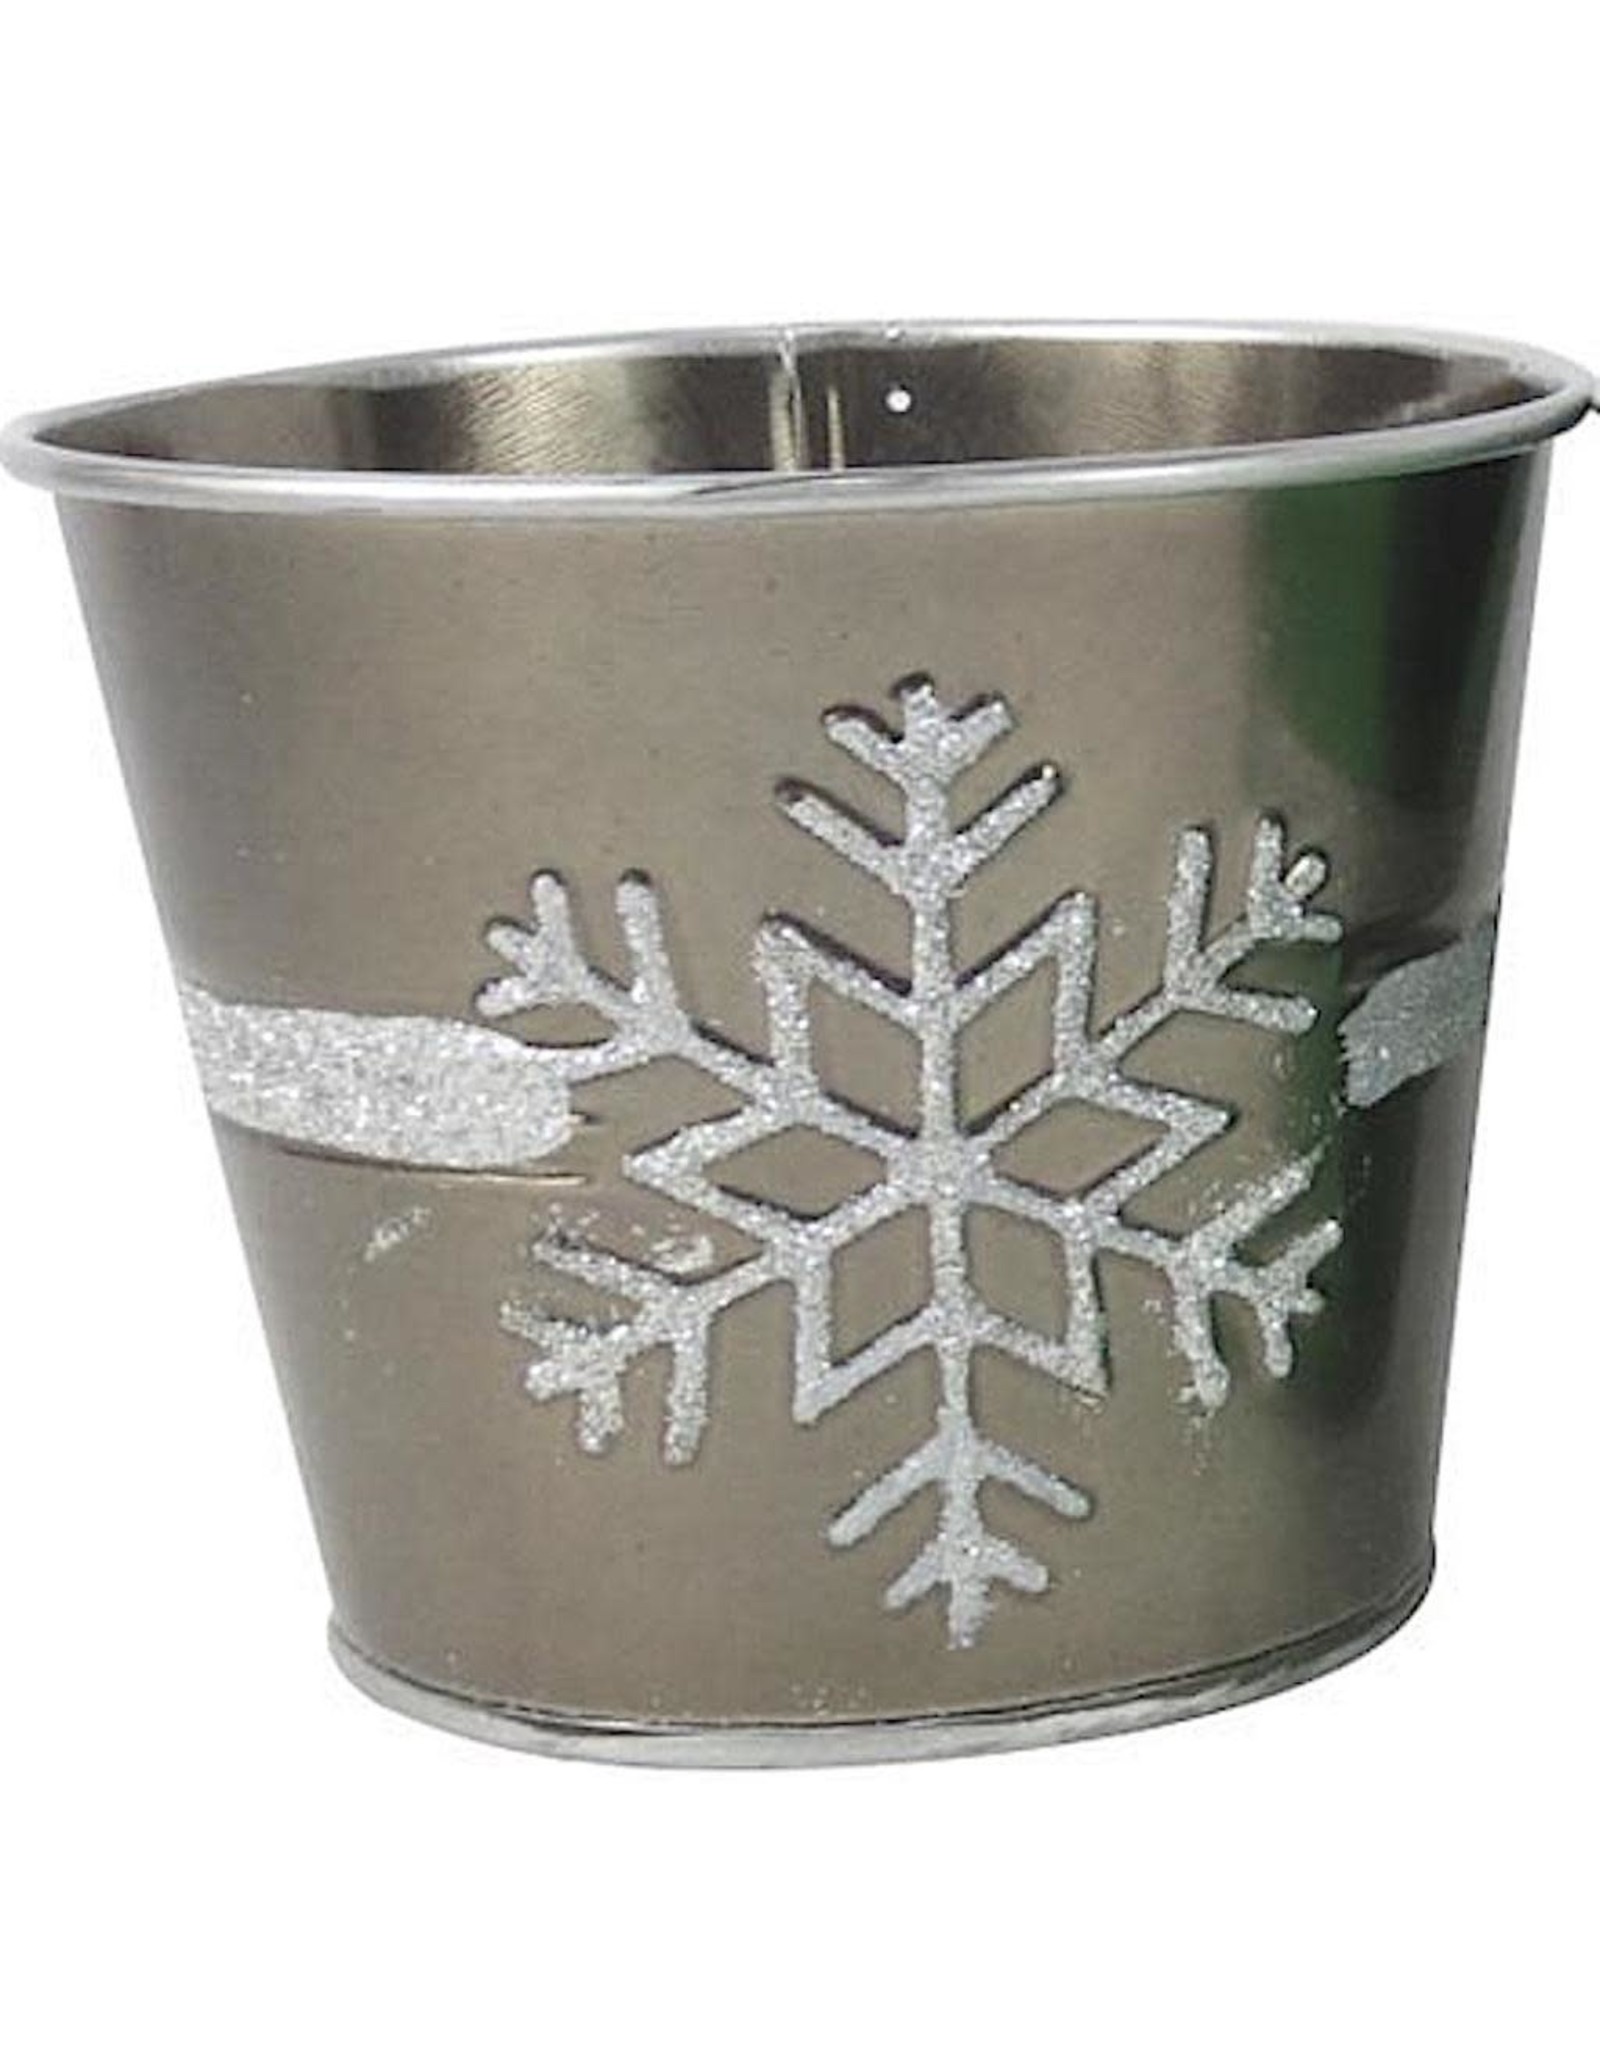 Darice Snowflake Christmas Tin Pot - Container Silver